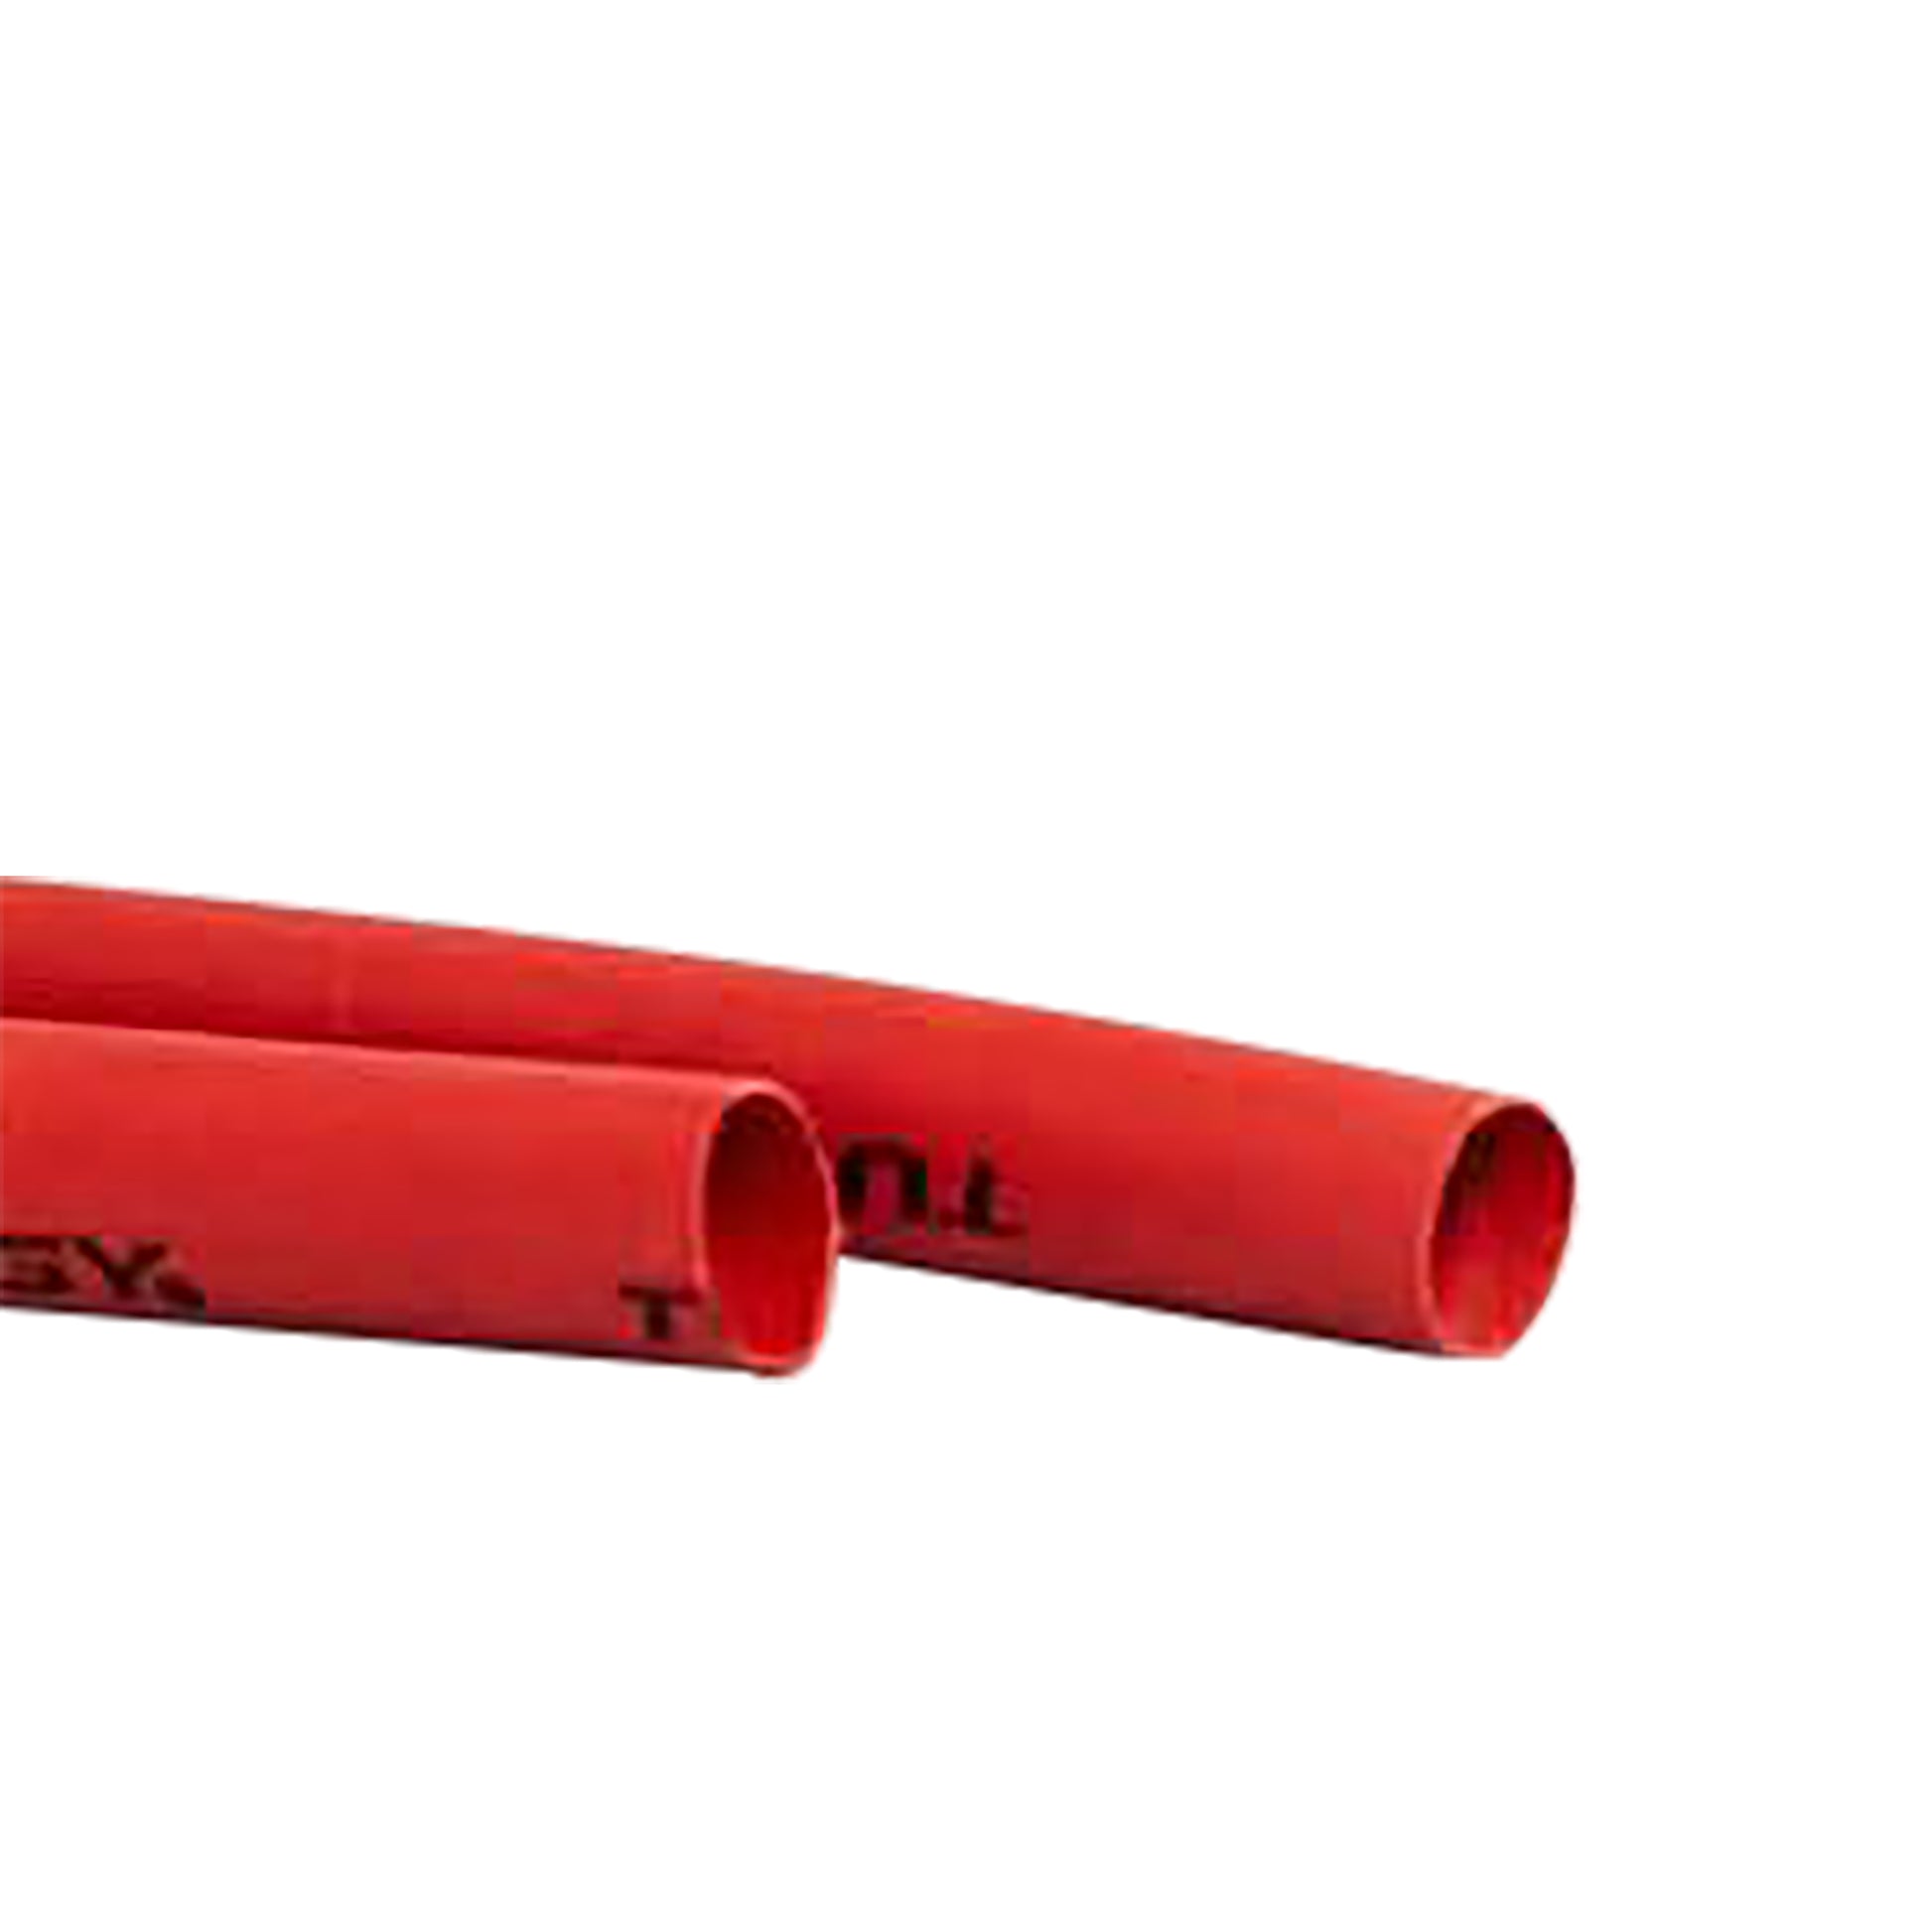 Flexible Thin Single Wall Non-Adhesive Heat Shrink Tubing 2:1 Red 1/2" ID - 100' Ft Spool